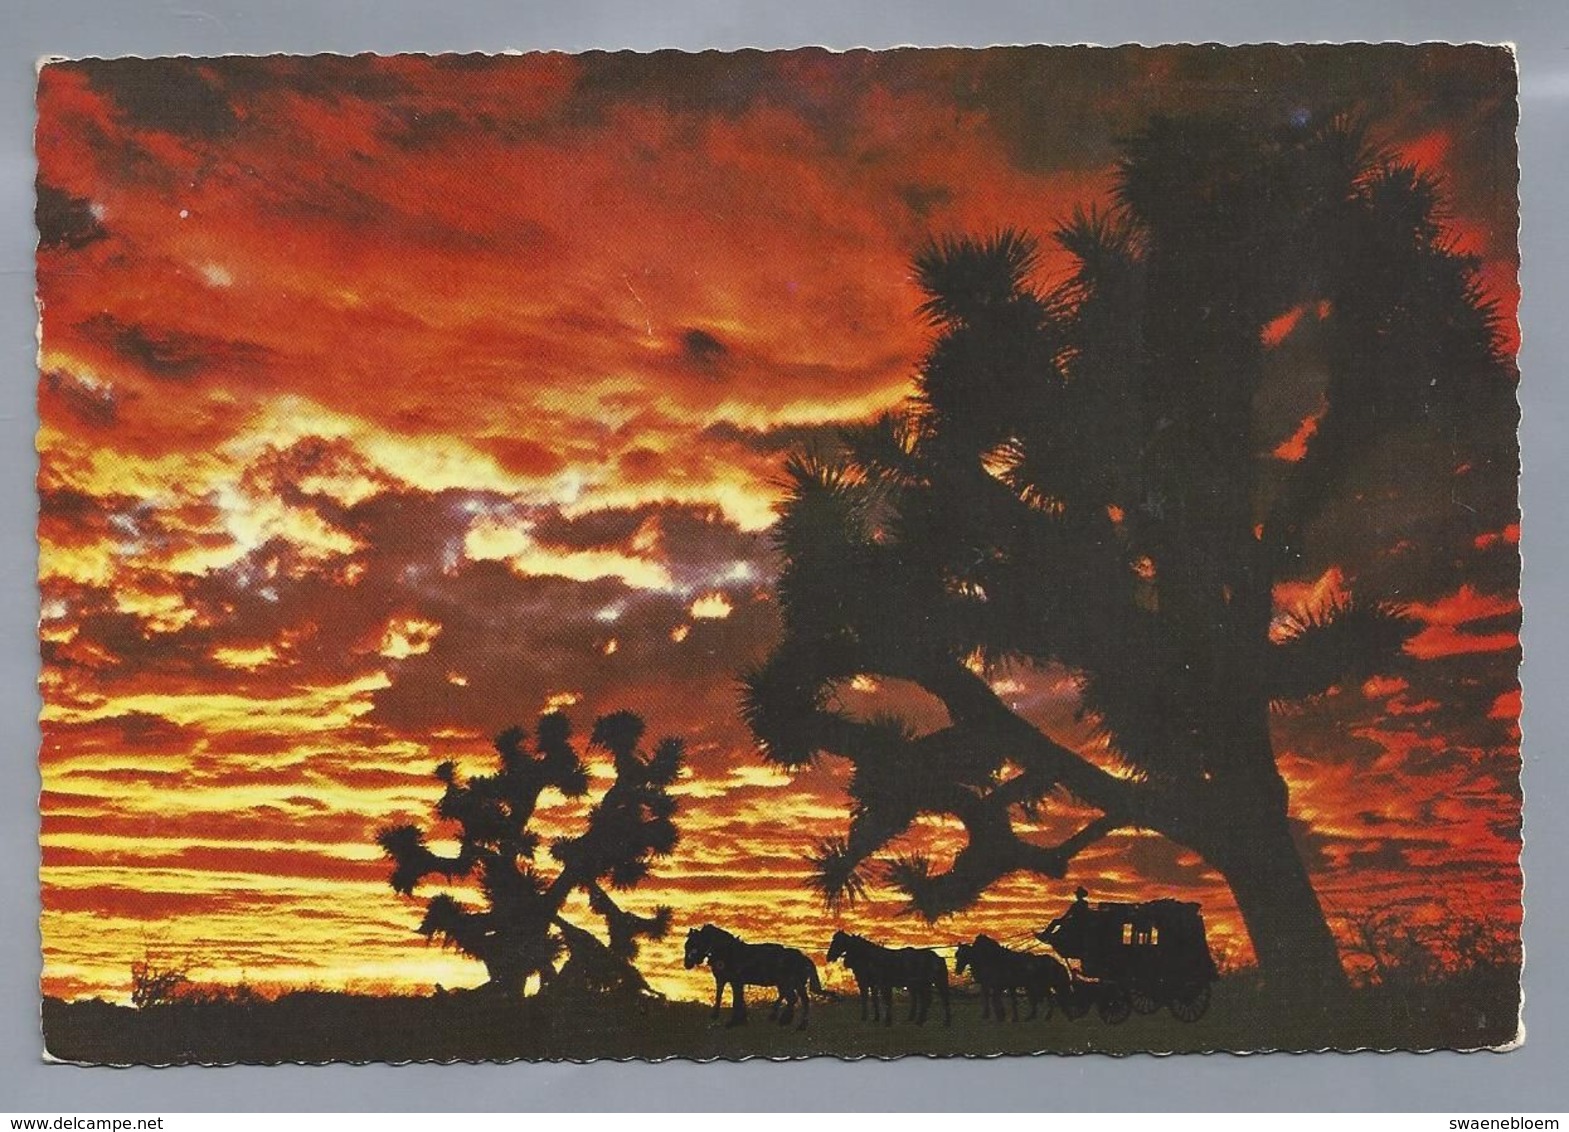 US.- CALIFORNIA, A COLORFUL SUNSET IN JOSHUALAND. JOSHUA TREE. - Palm Springs